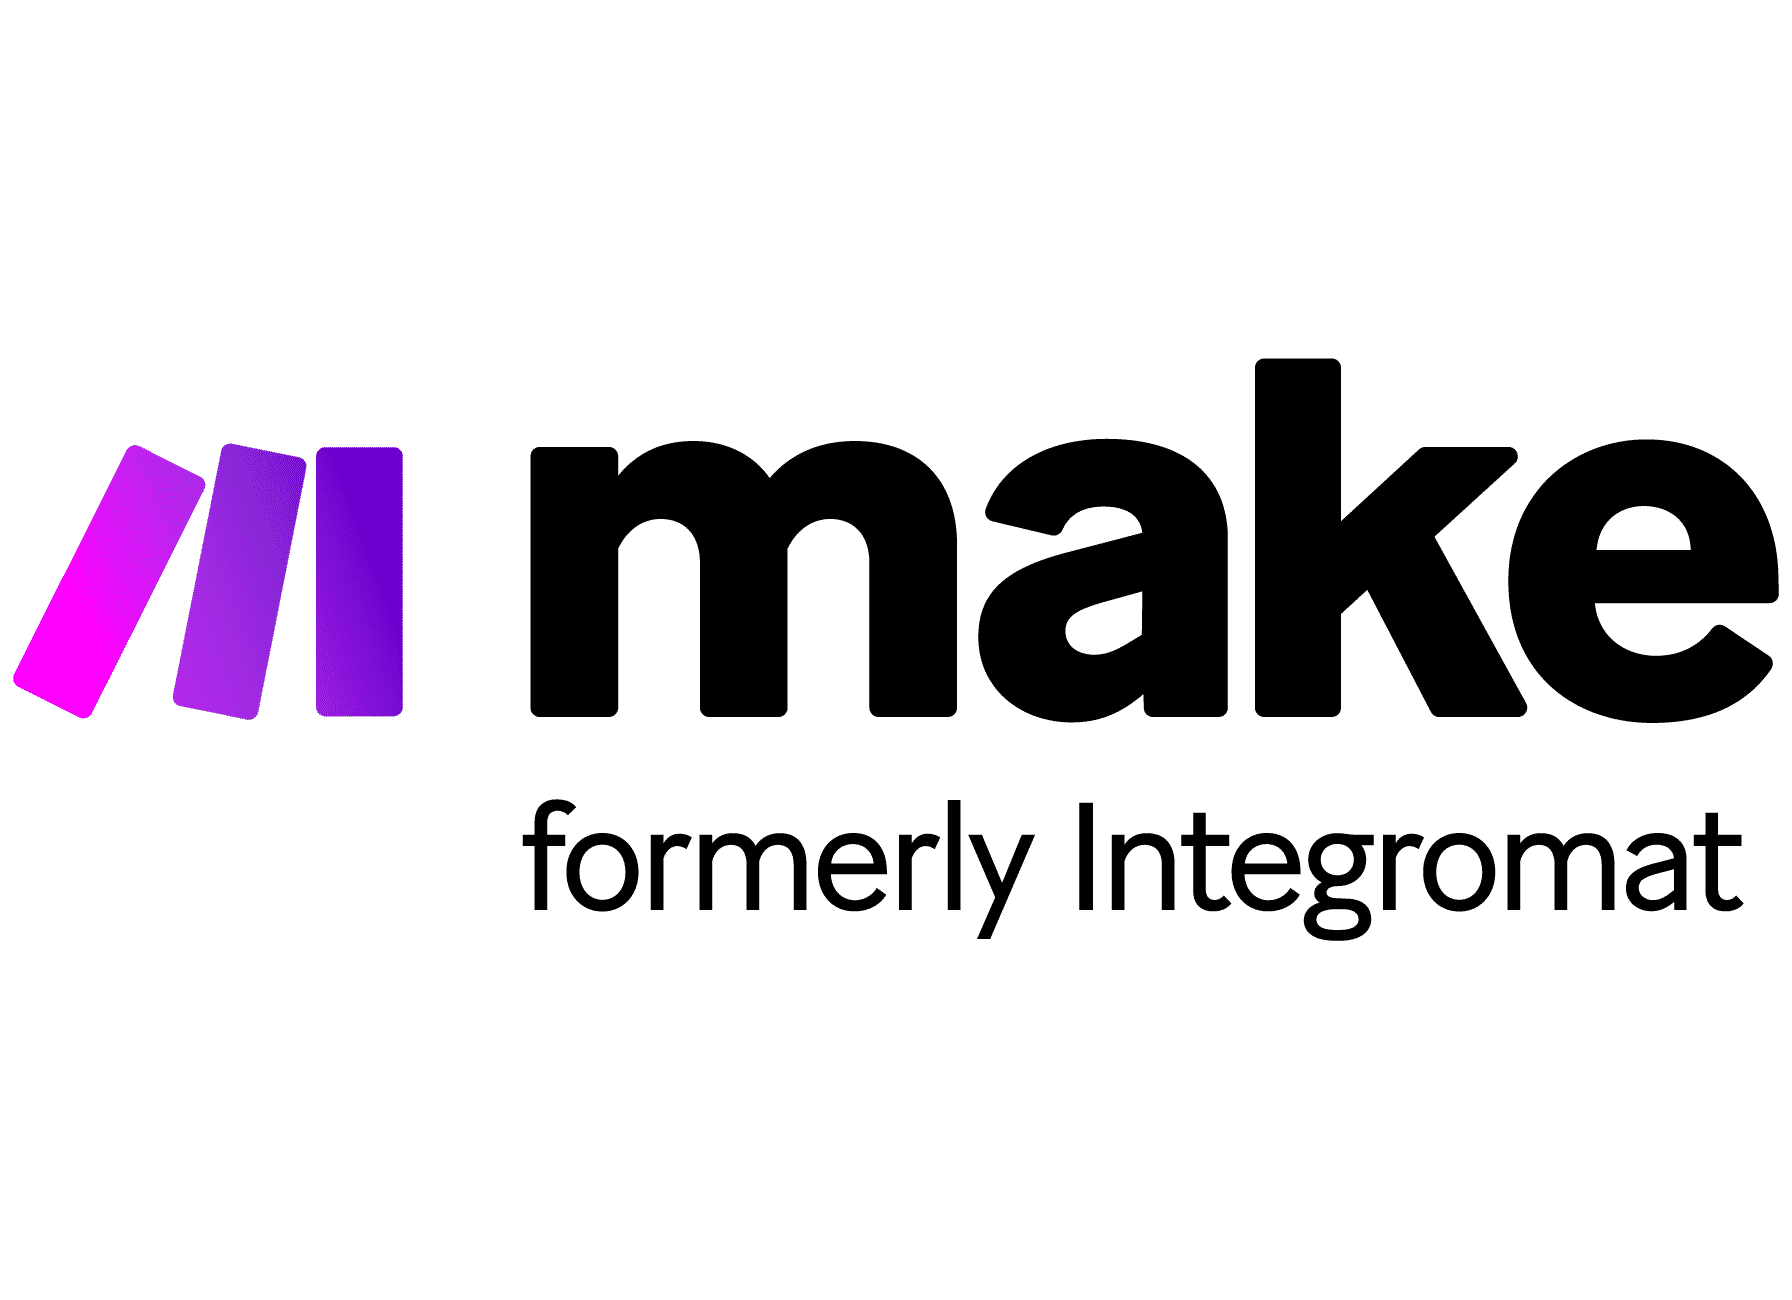 make logo